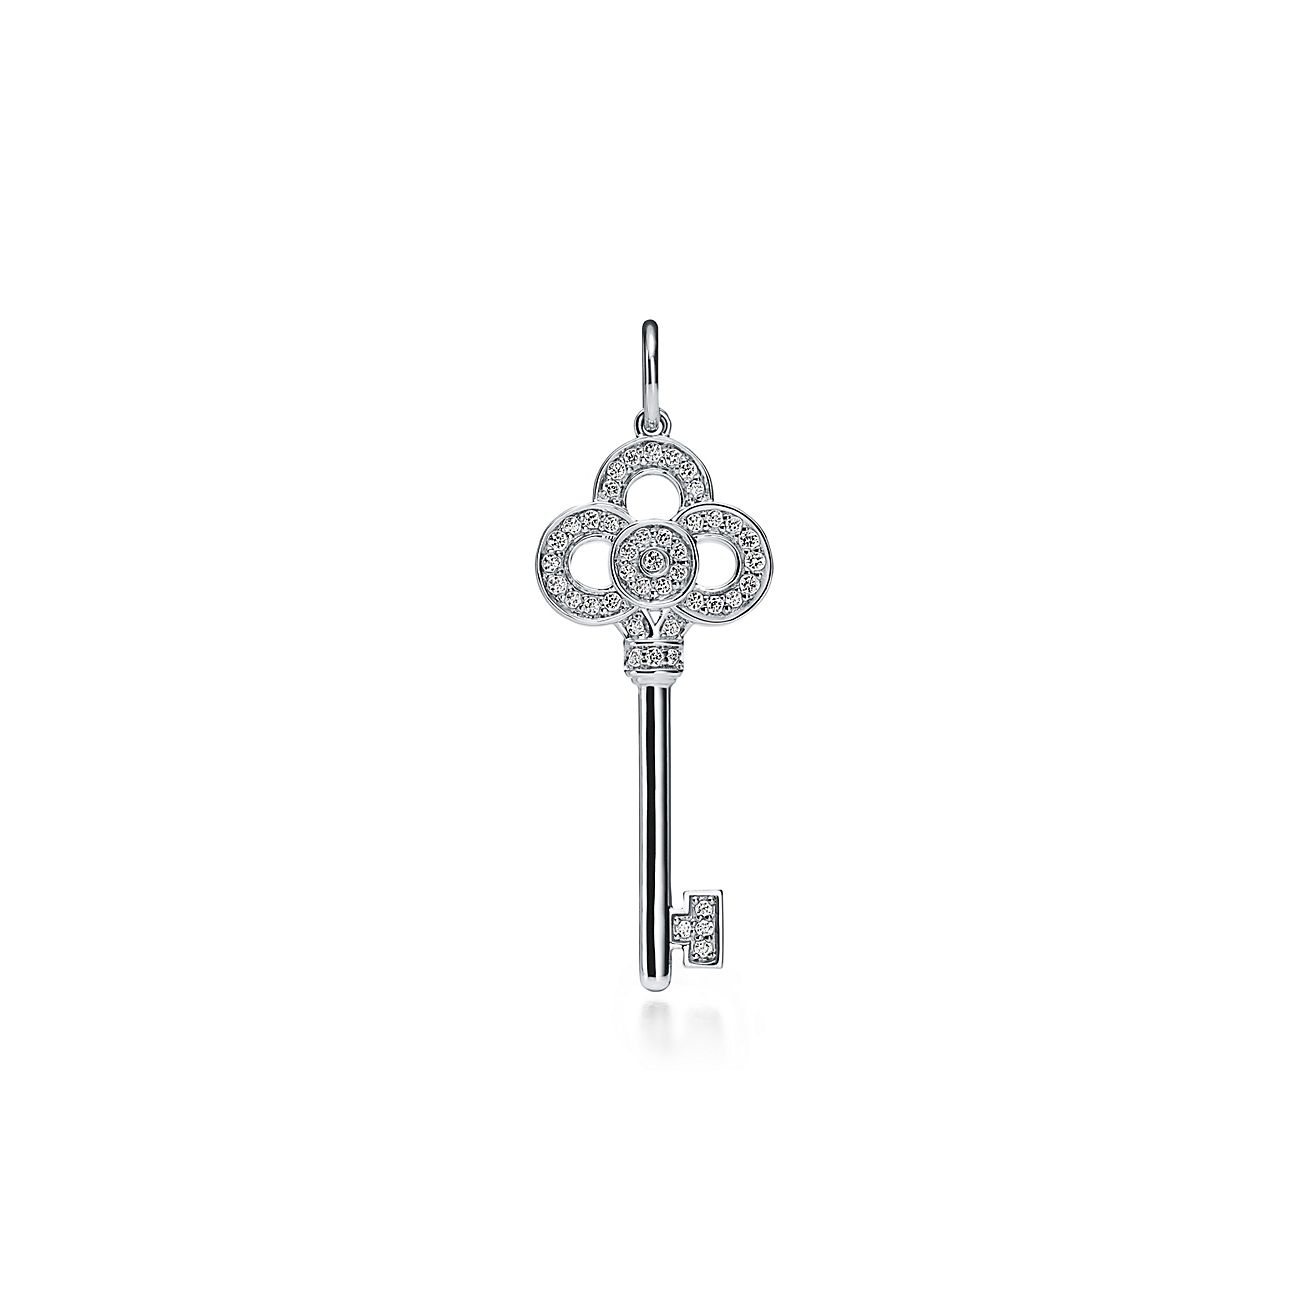 Tiffany Keys mini crown key pendant in 